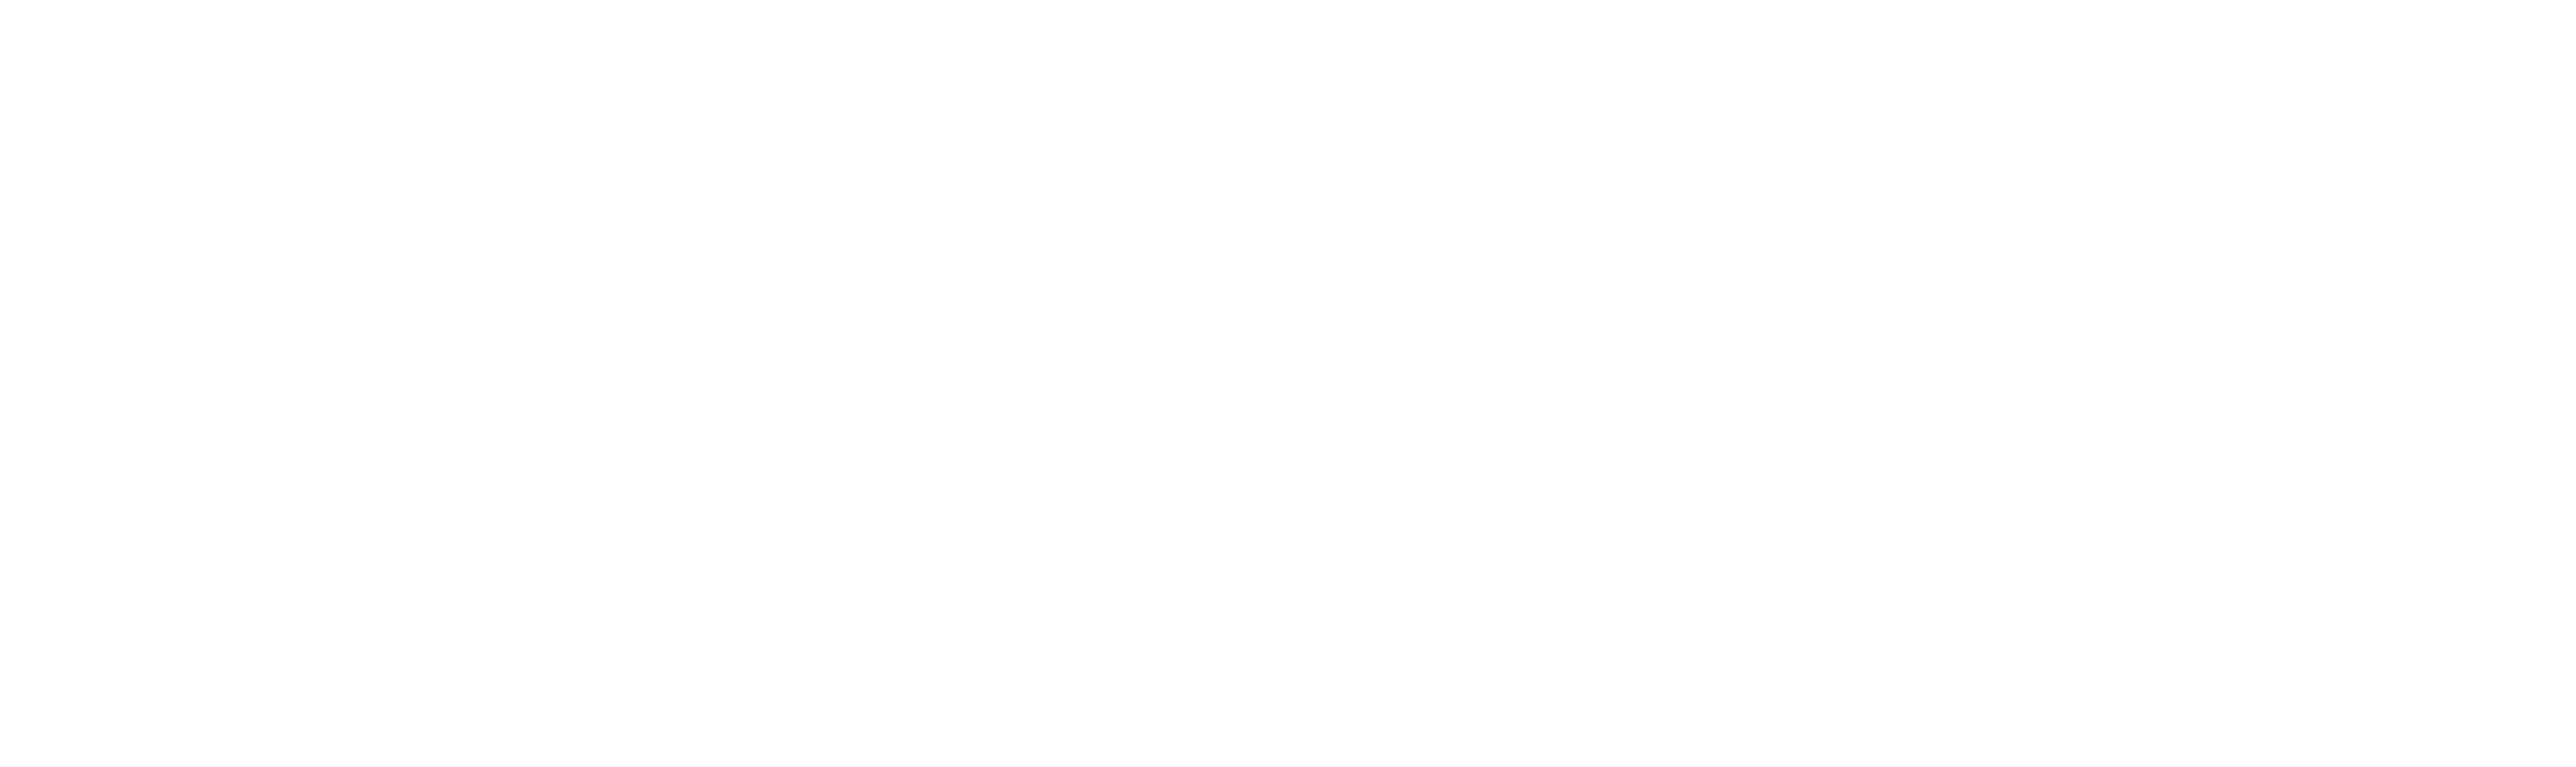 Quoter Logo White